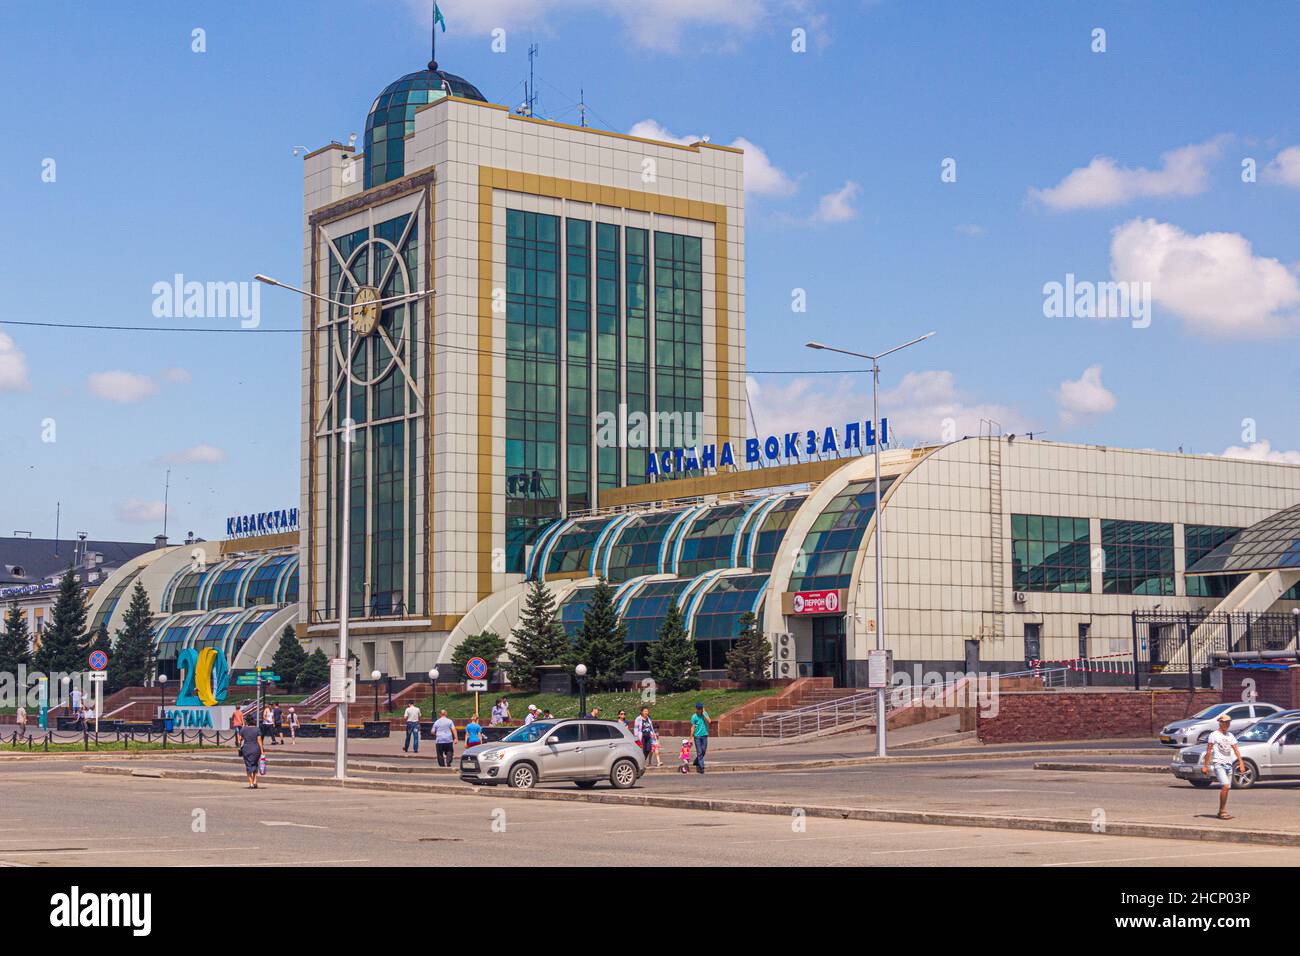 ASTANA, KAZAKHSTAN - JULY 8, 2018: View of the railway station Astana in Astana now Nur-Sultan , capital of Kazakhstan Stock Photo